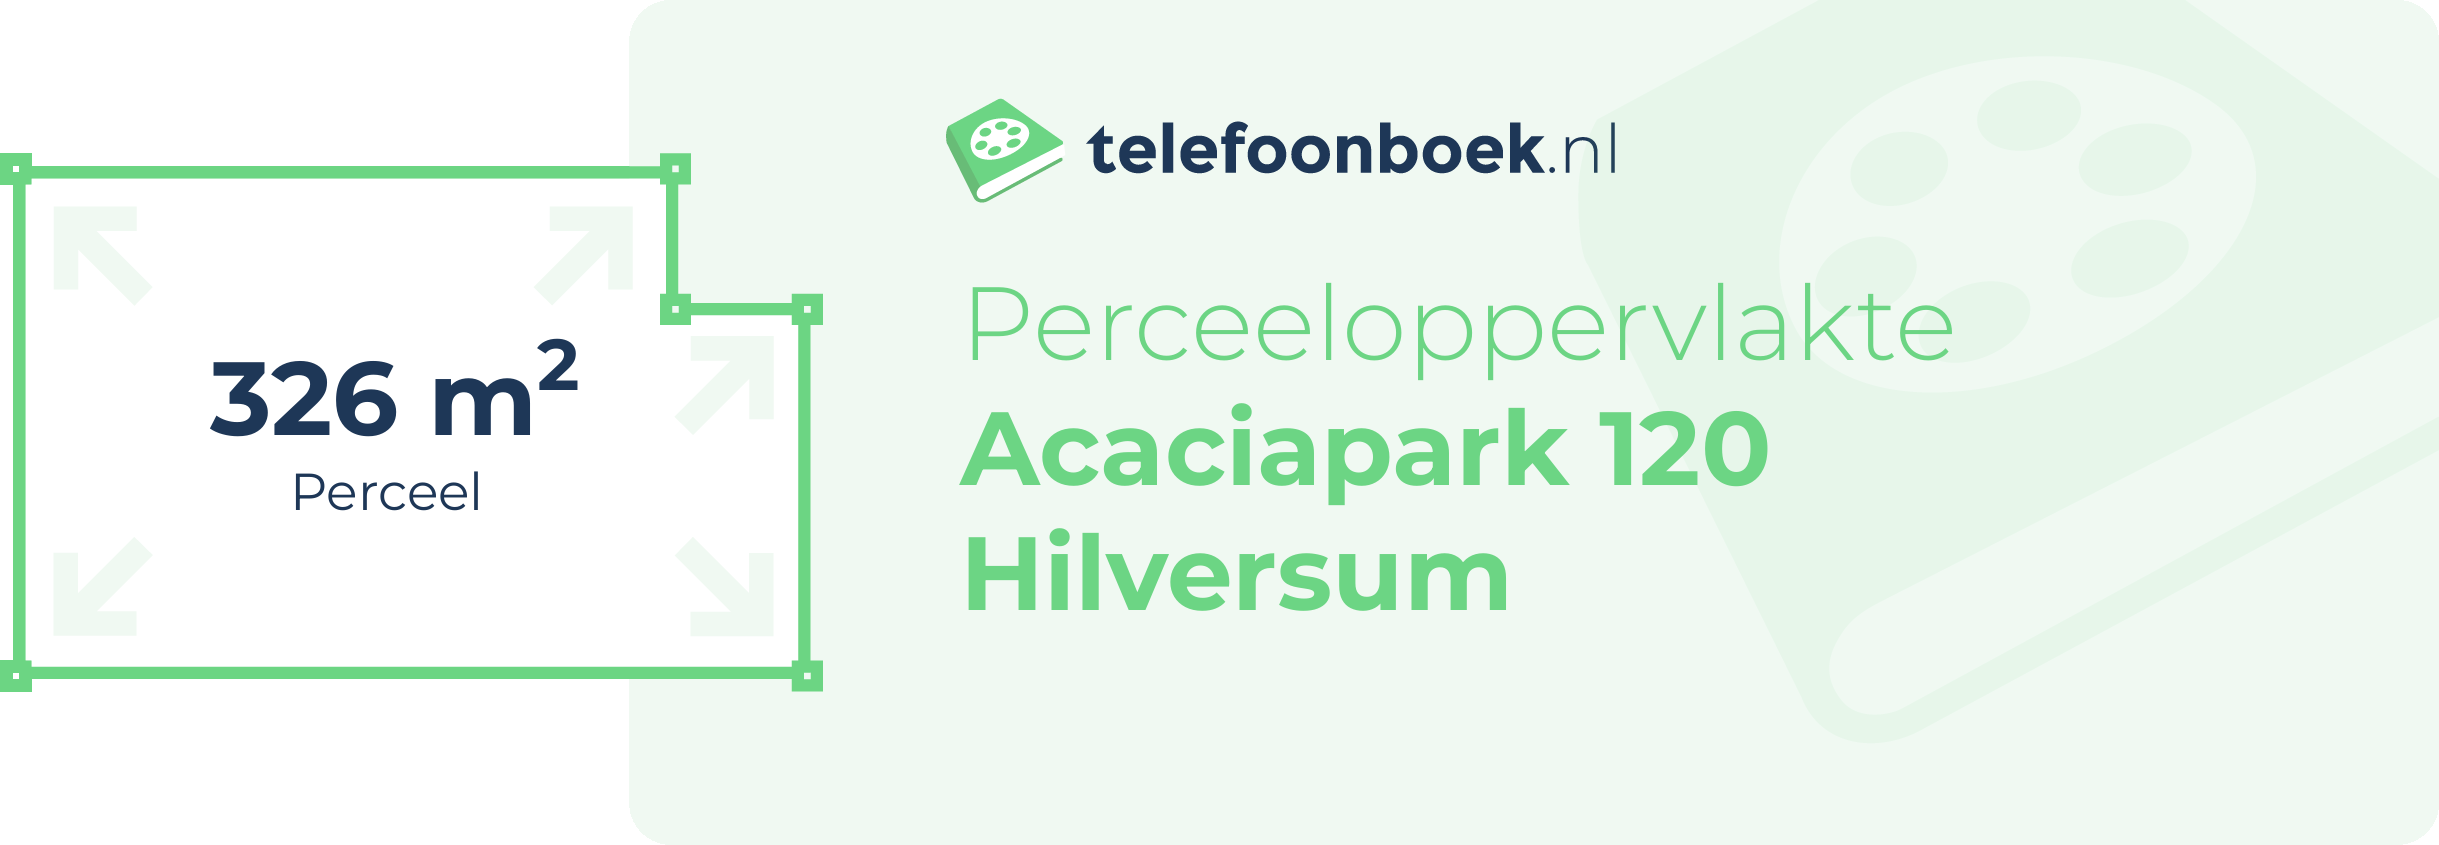 Perceeloppervlakte Acaciapark 120 Hilversum